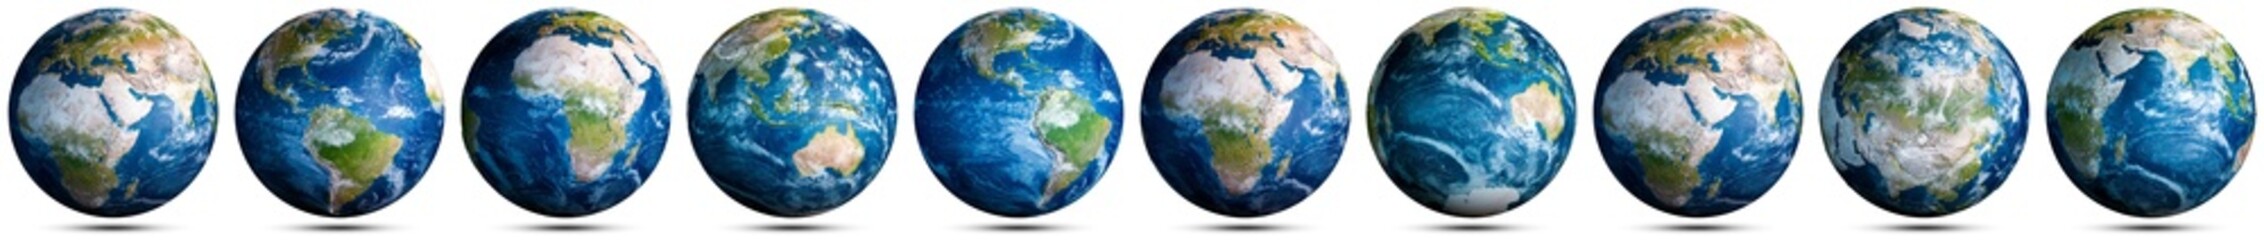 Earth globe world map set - 758150854